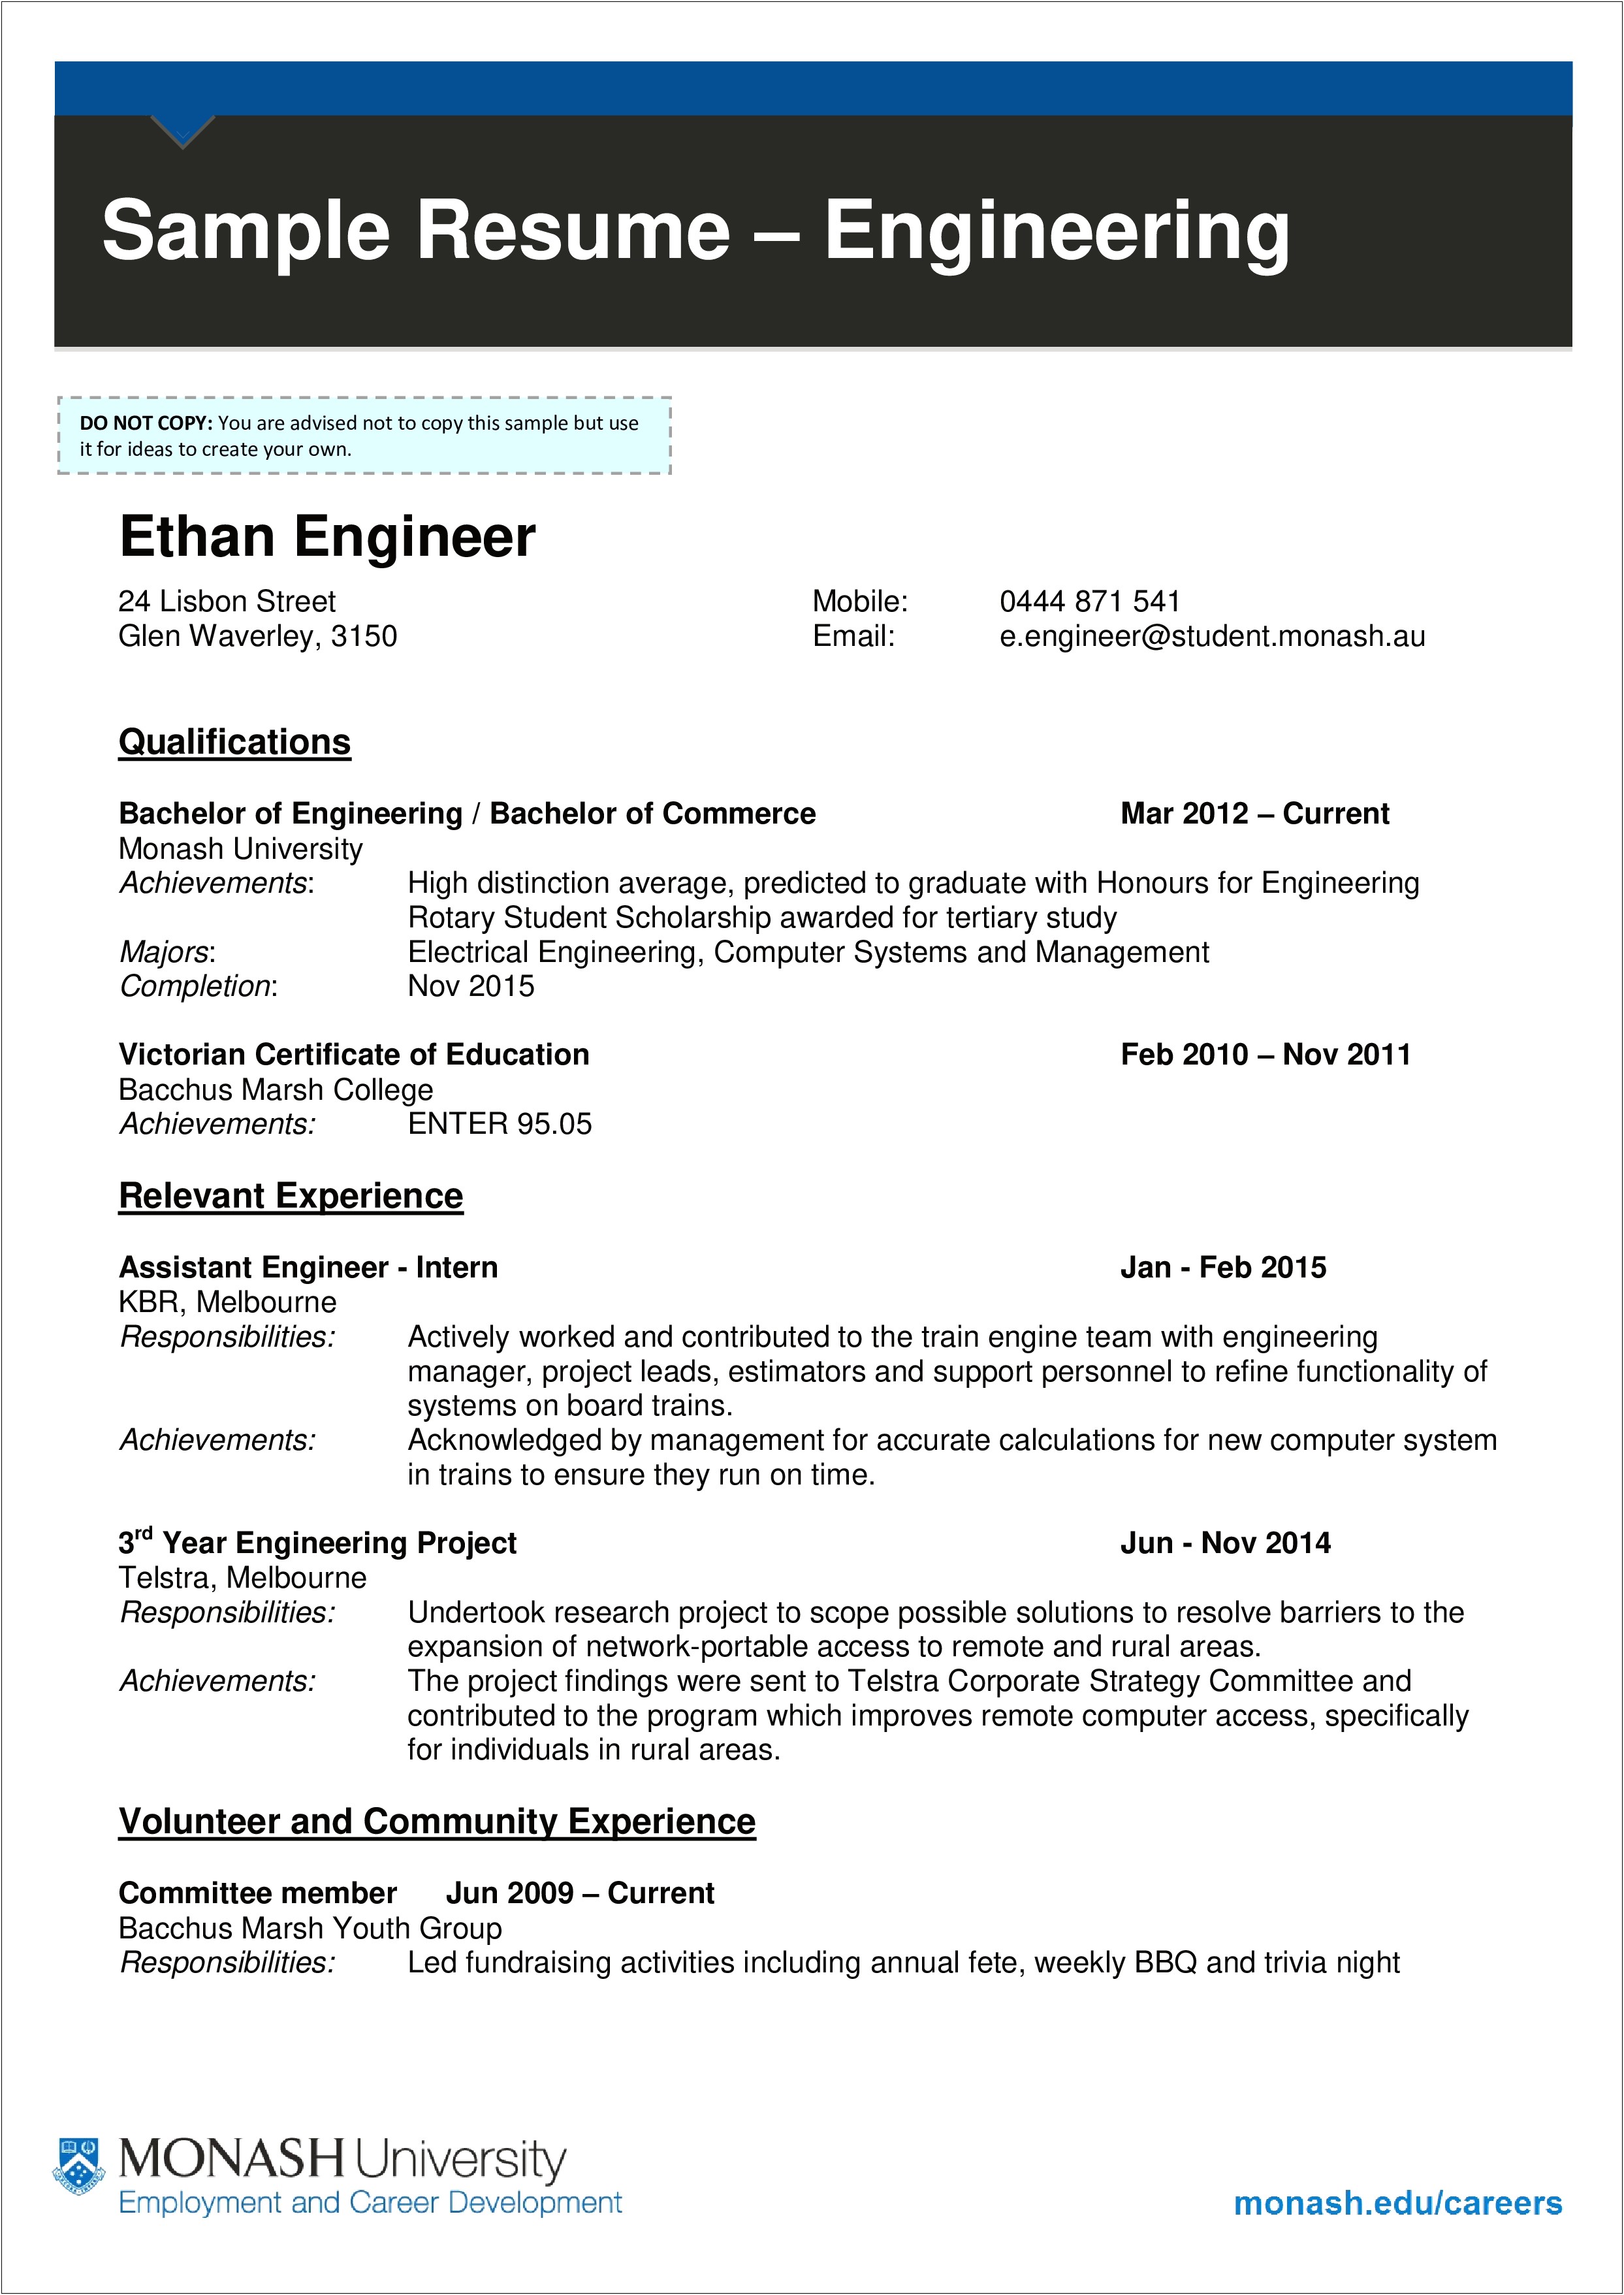 Sample Resume For Mechanical Engineer Fresh Graduate Download